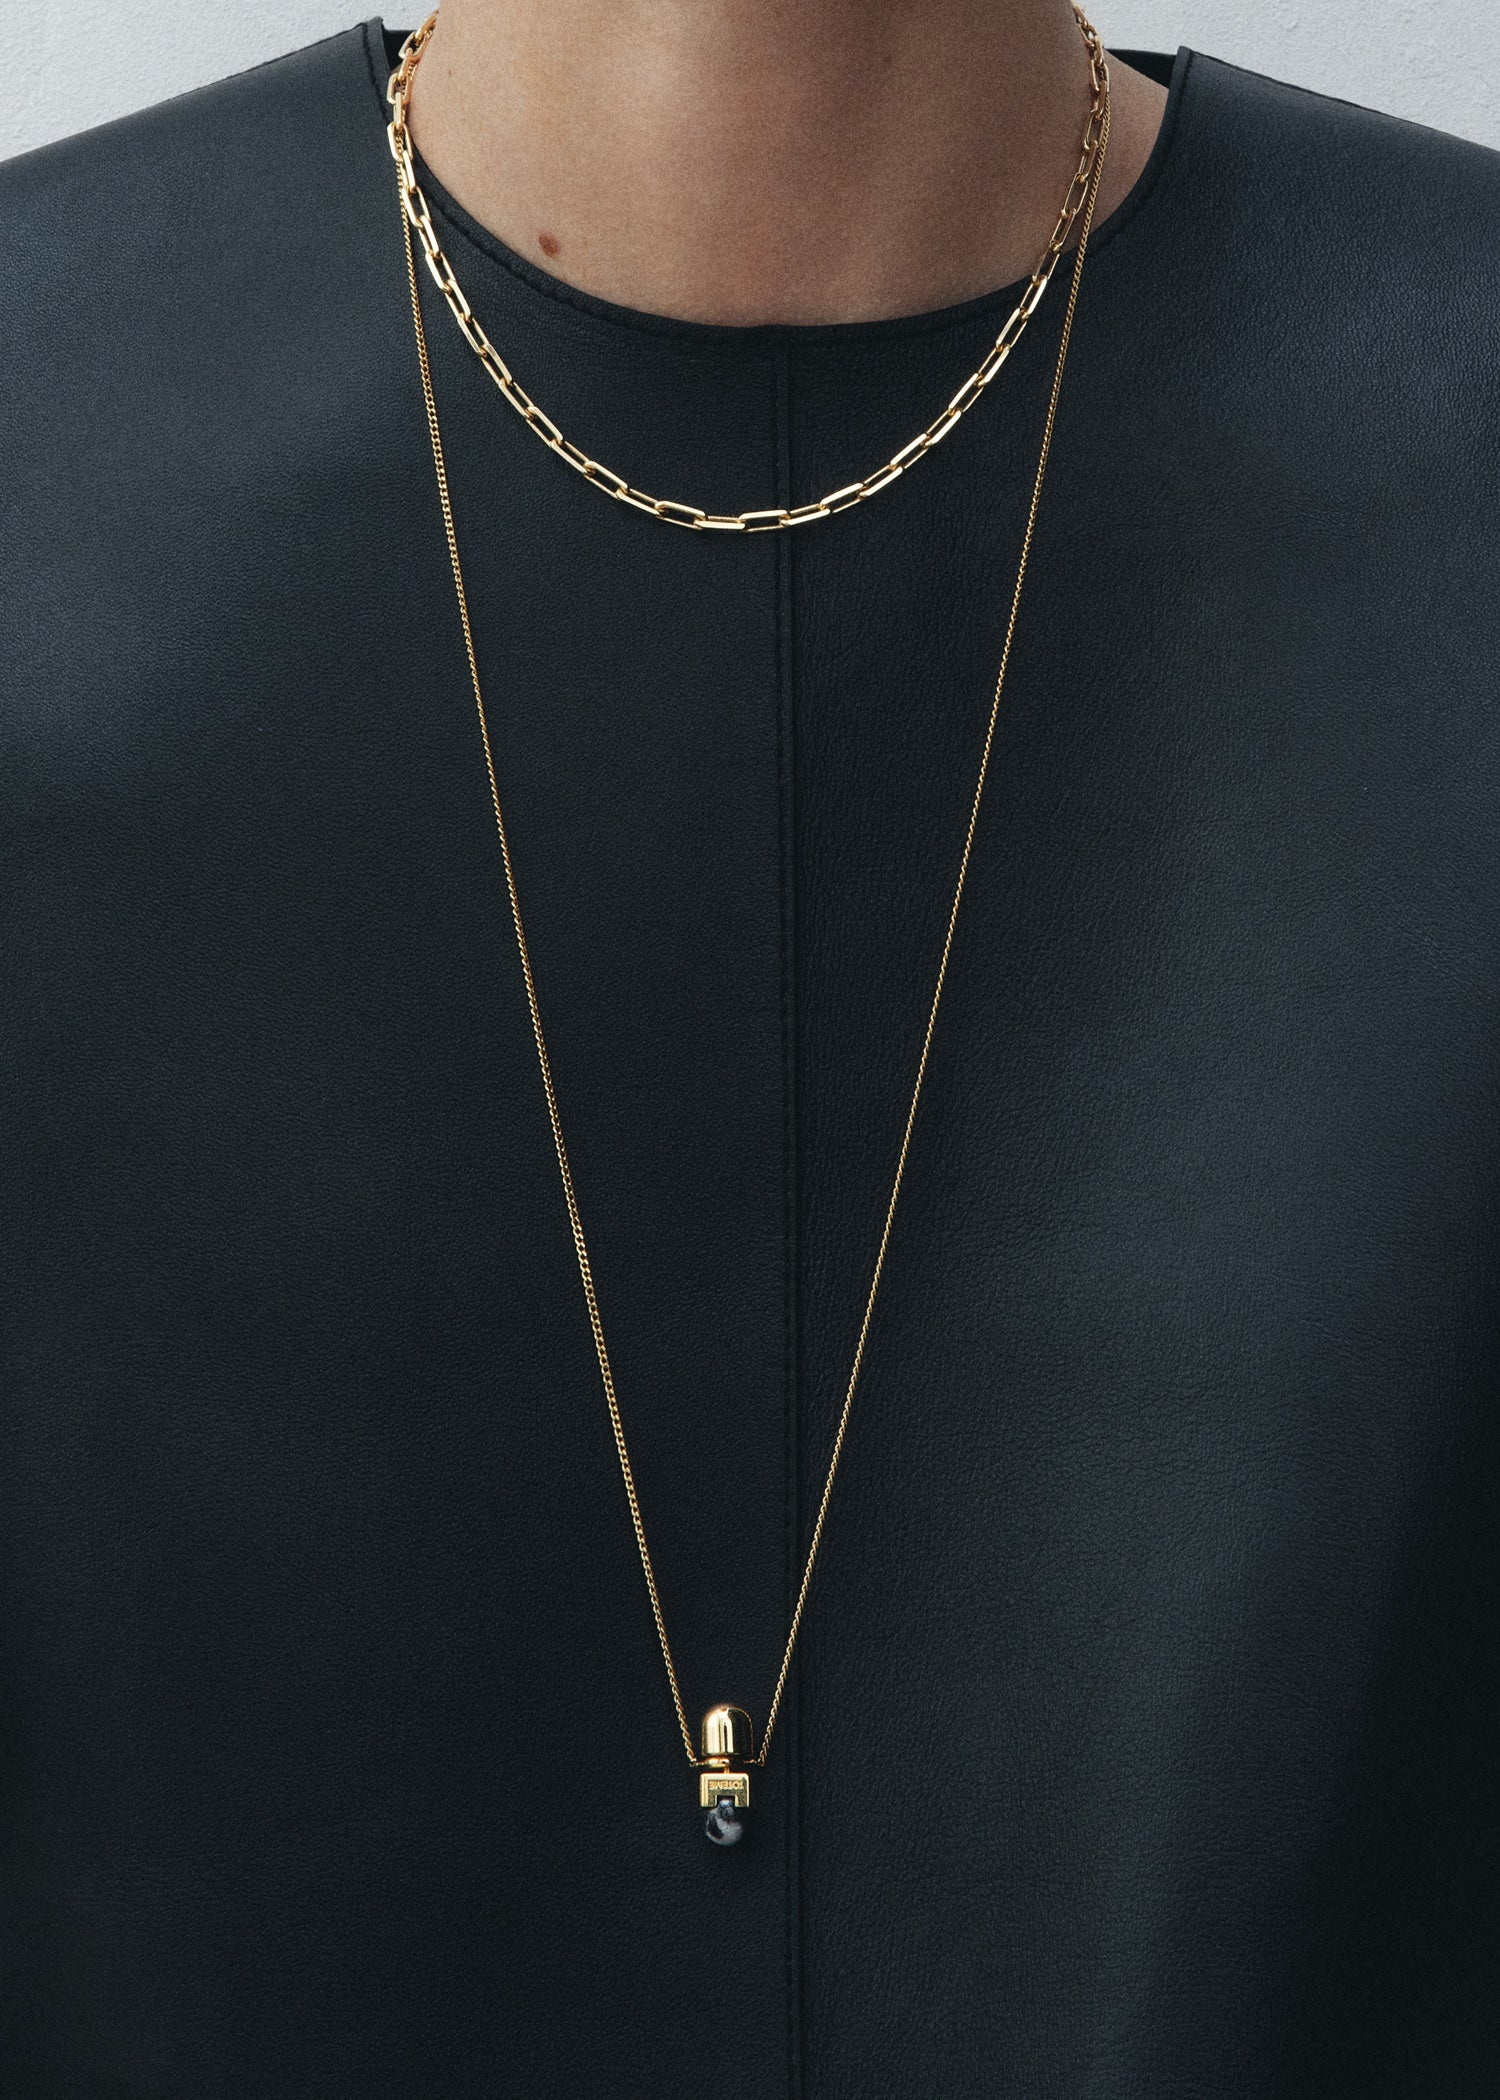 Long jasper necklace black/off white - 2